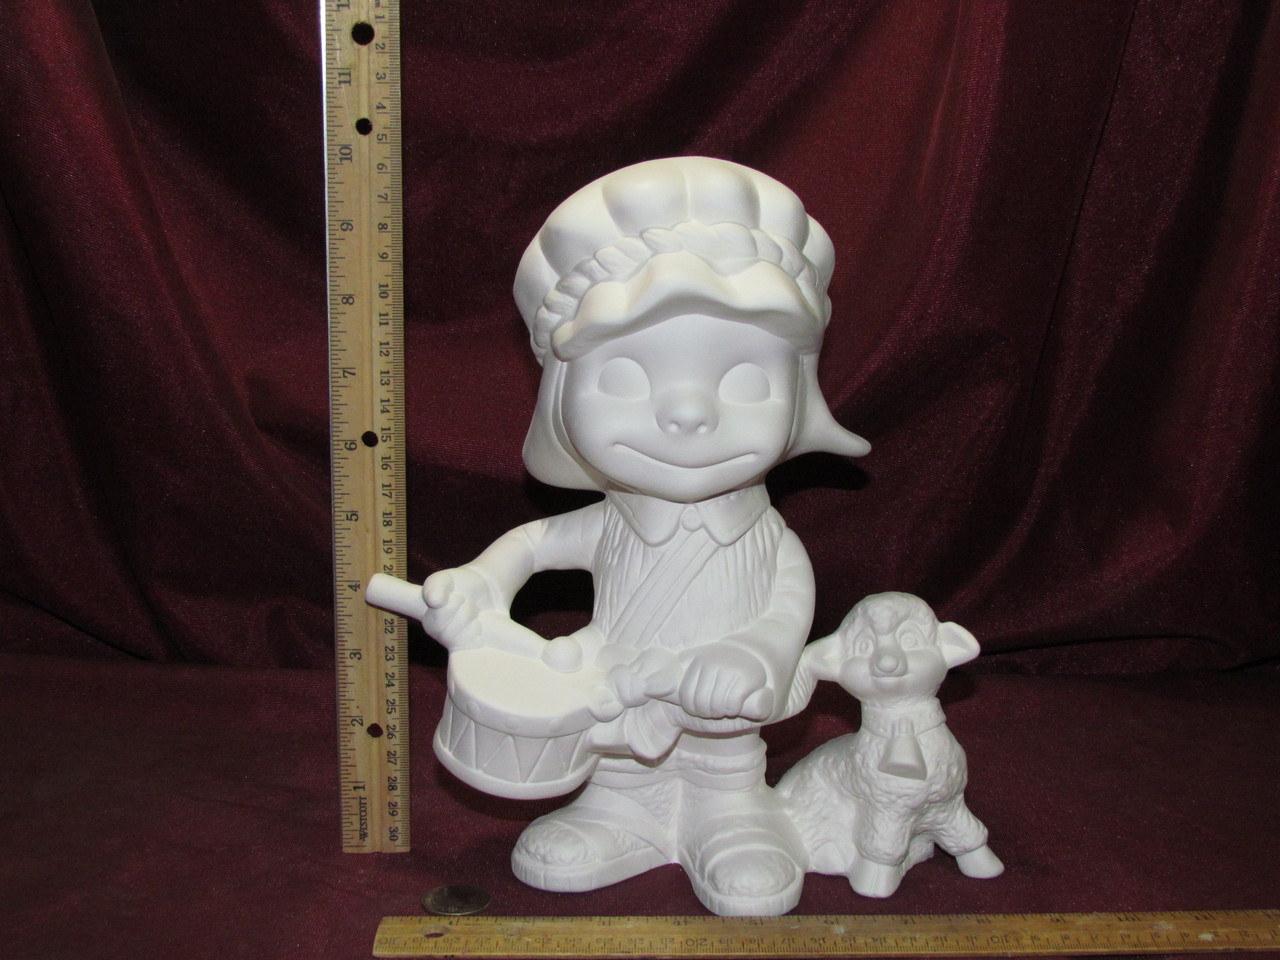 Ceramic Bisque Happy Smiley Figurine Clown pyop unpainted ready to paint  diy - Fat Cat Ceramics